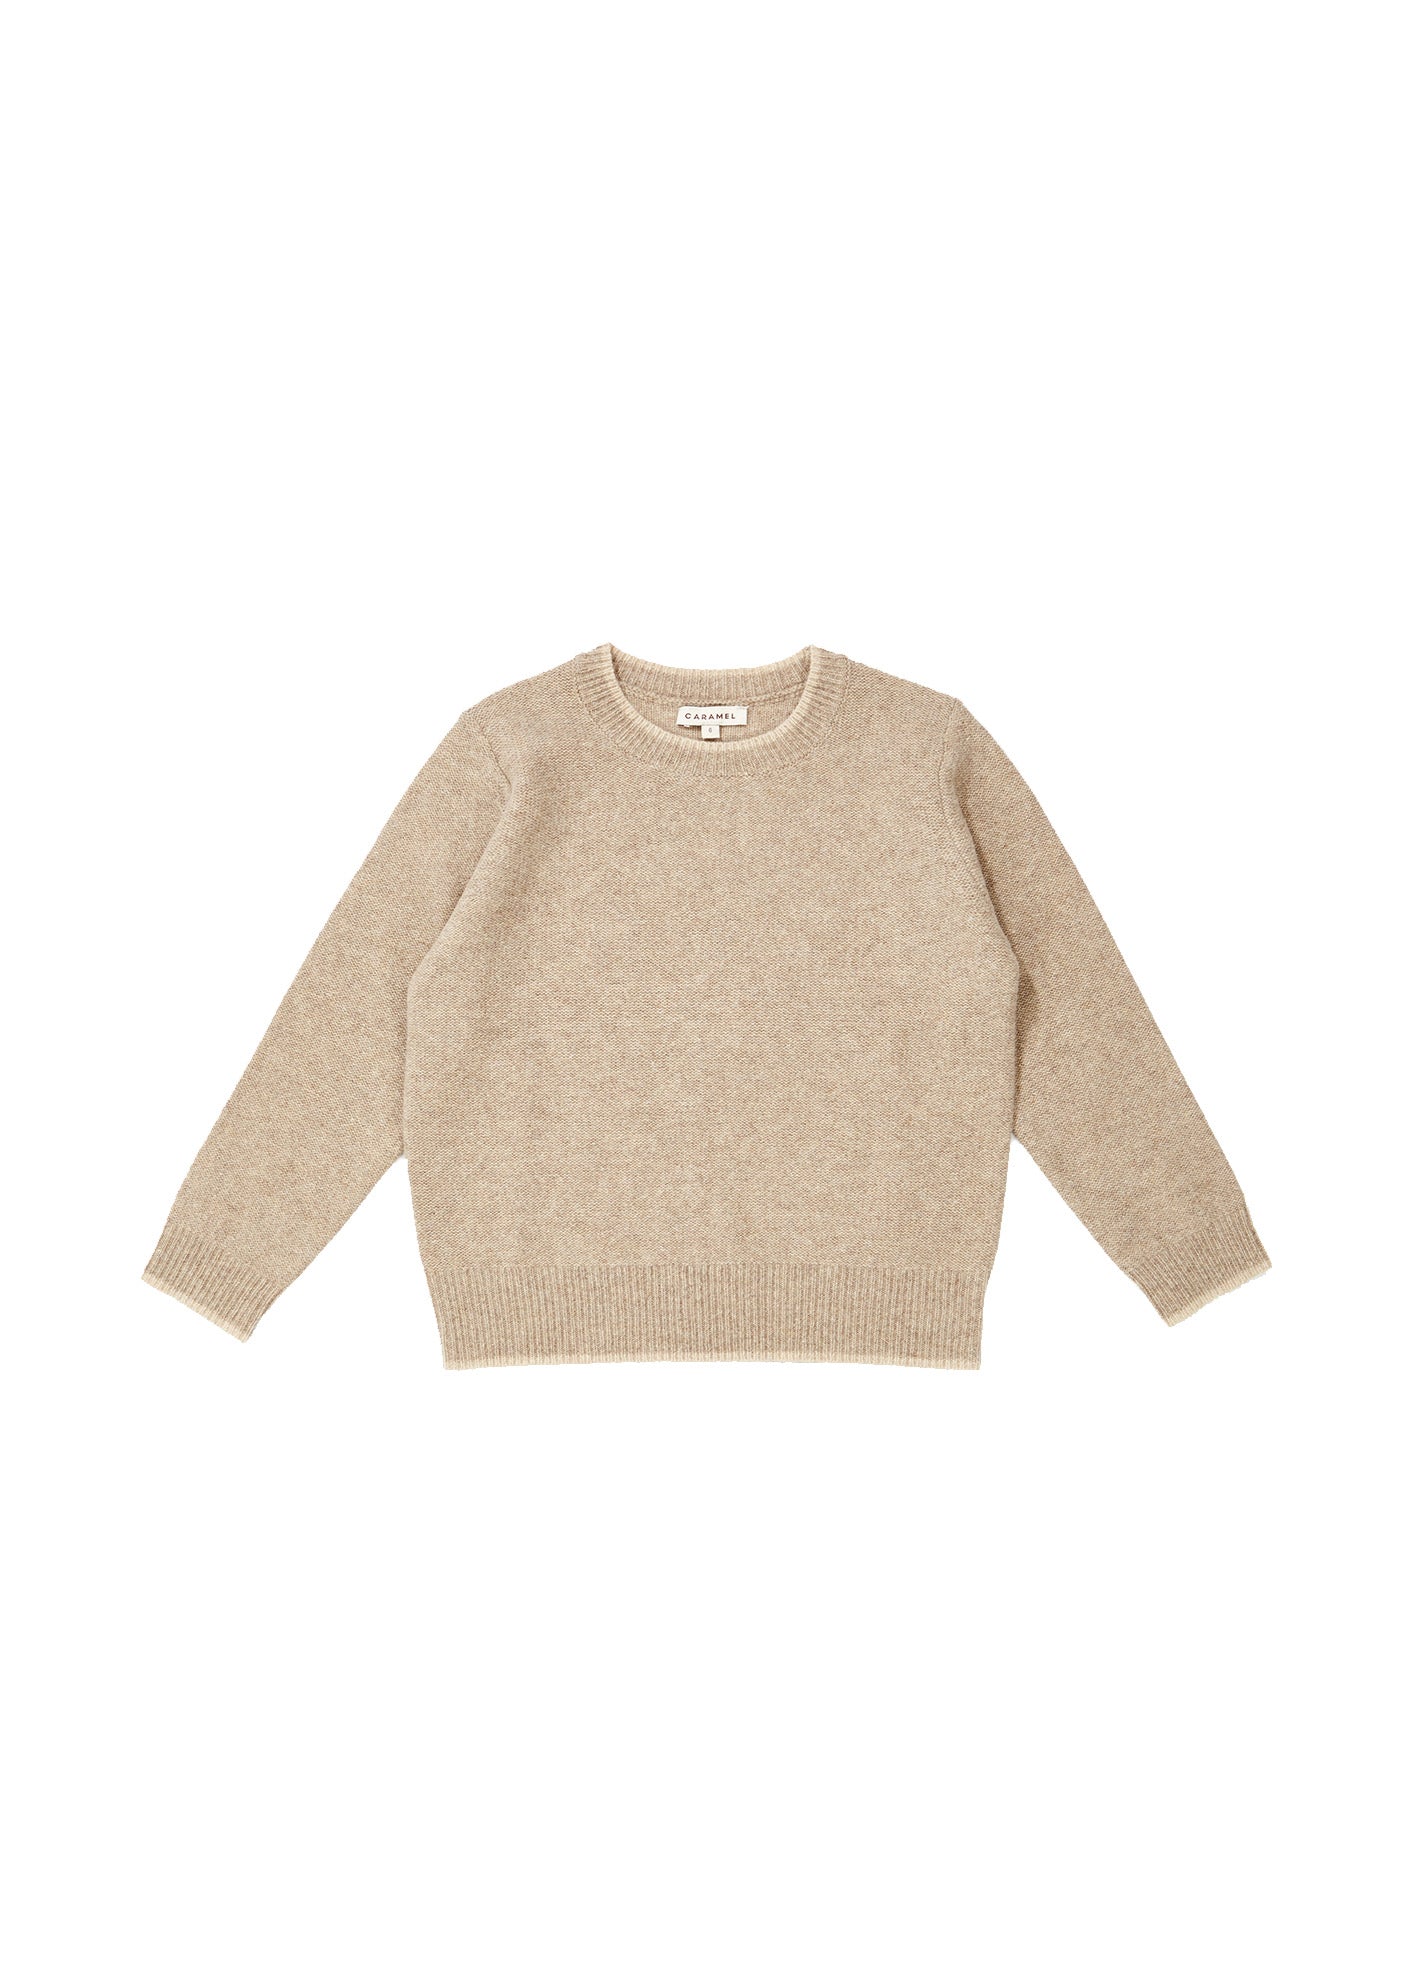 Boys & Girls Khaki Wool Sweater